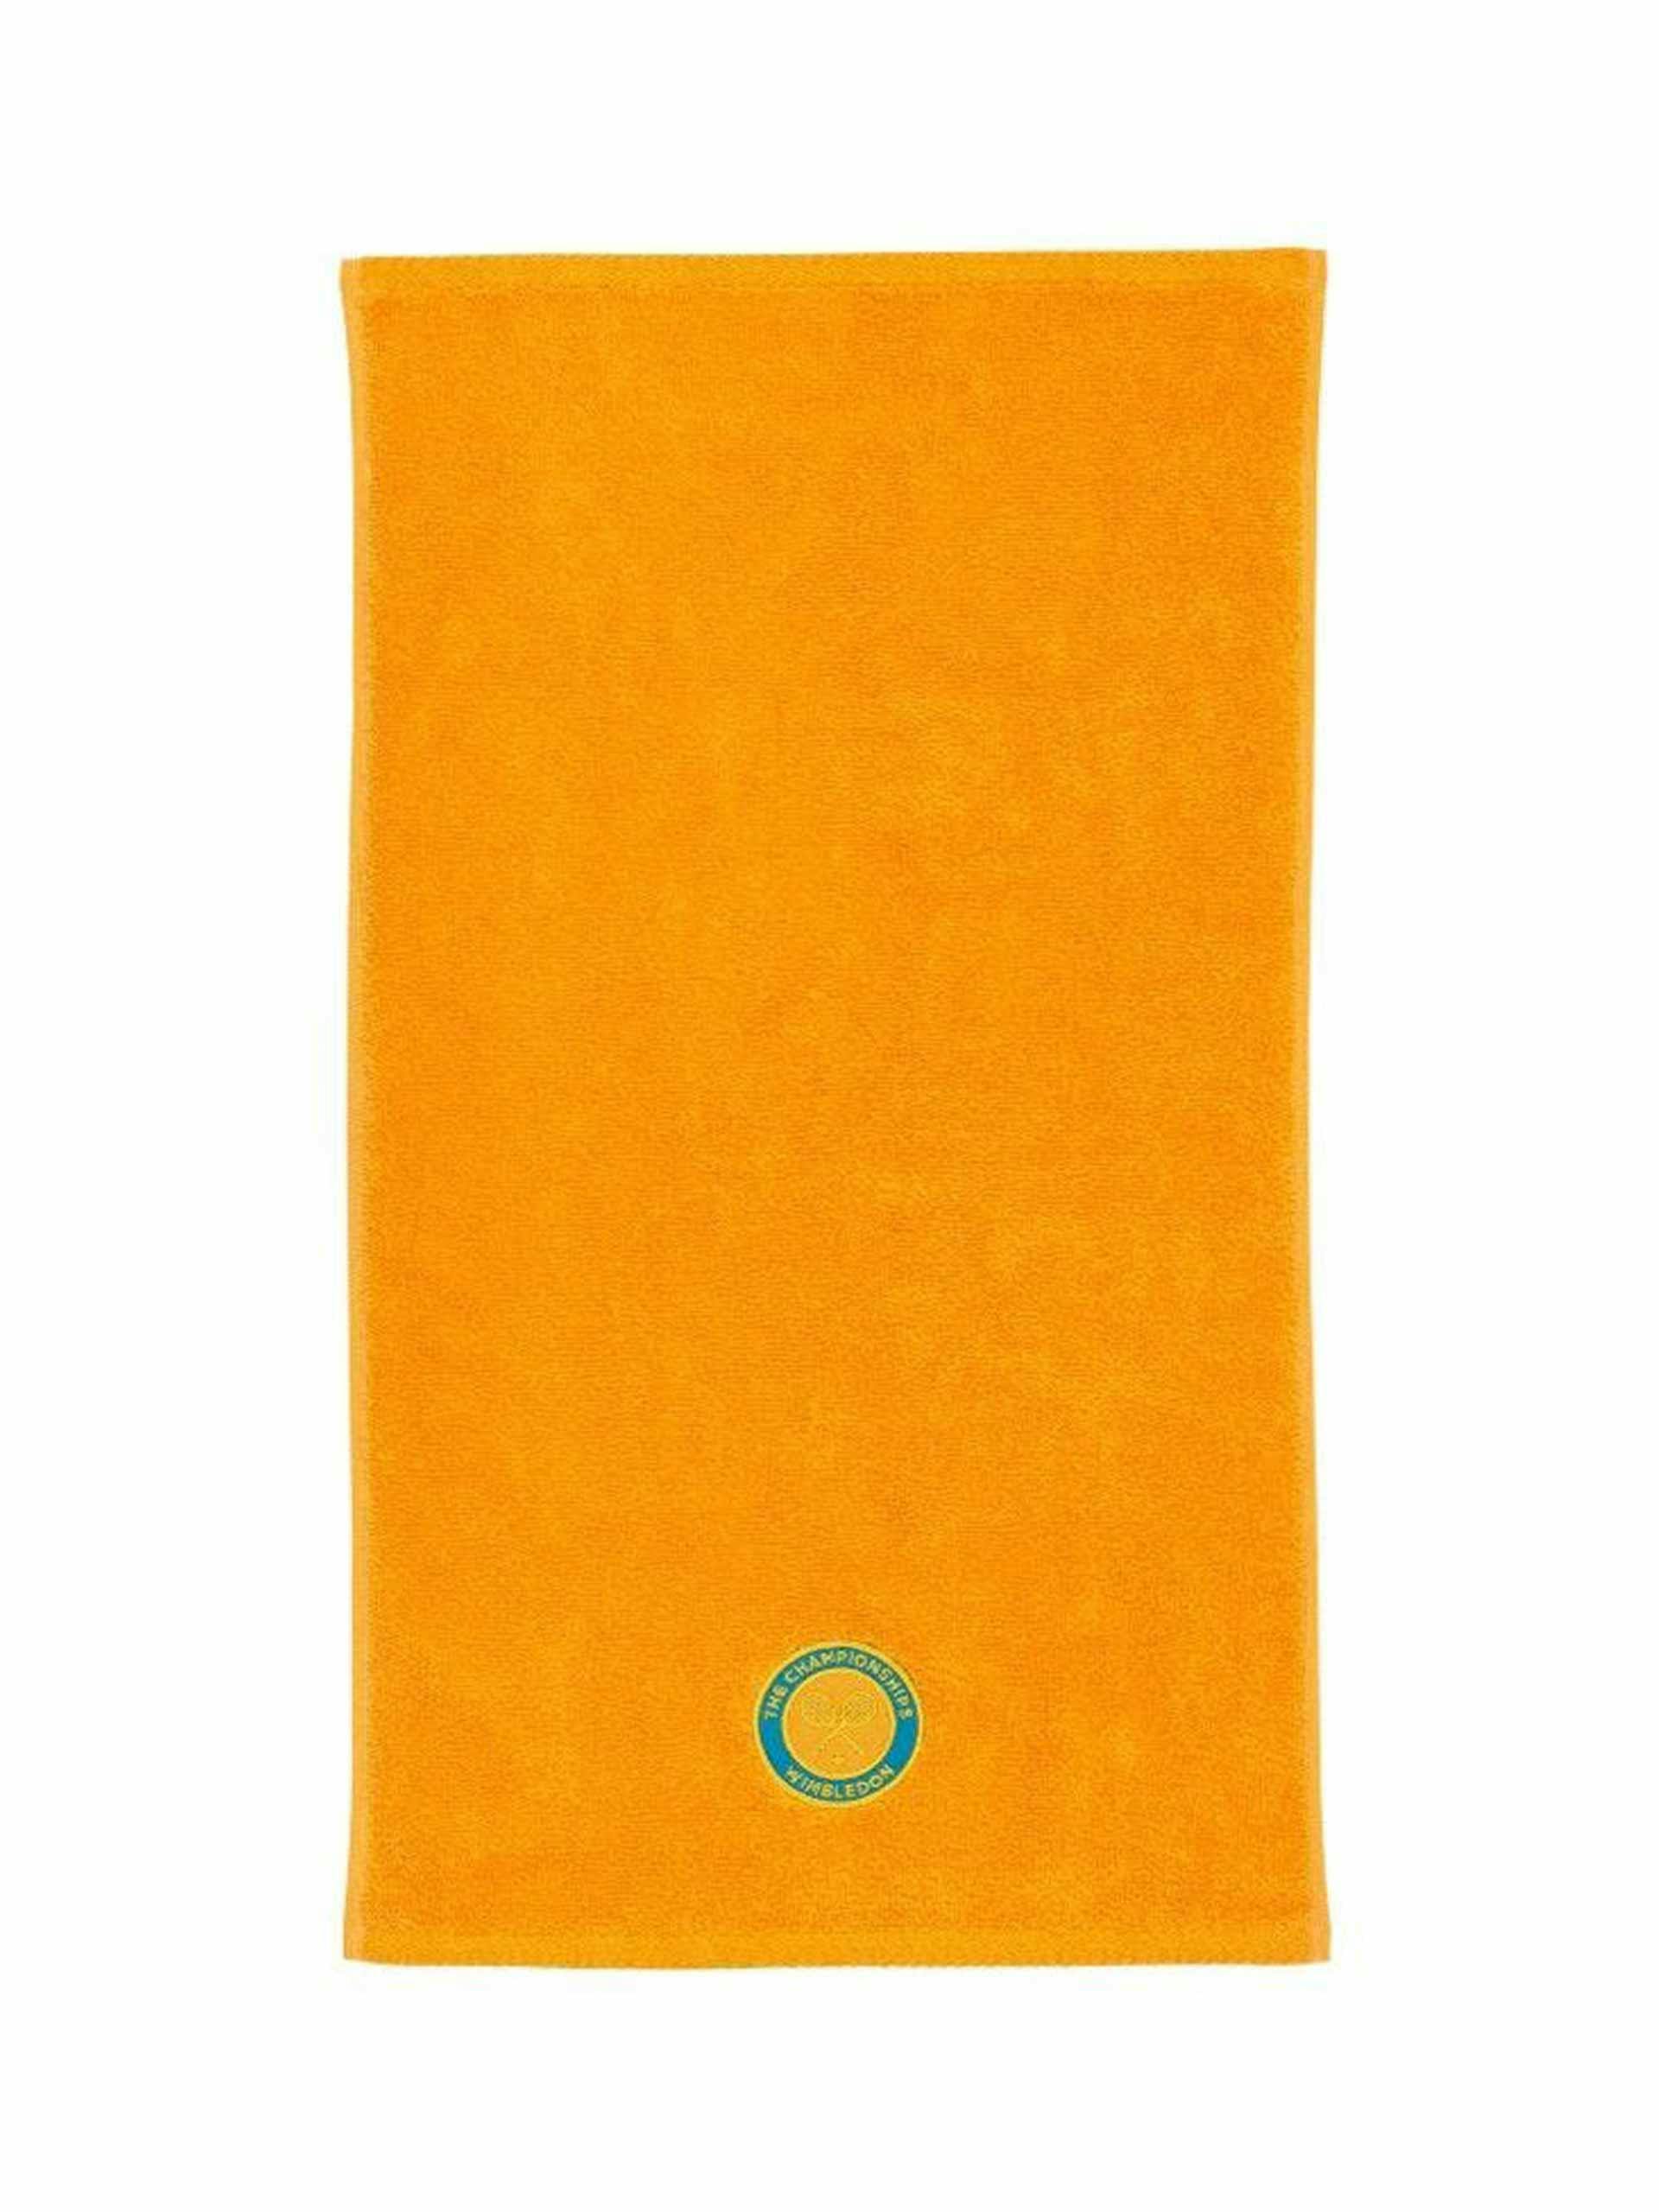 Wimbledon orange hand towel